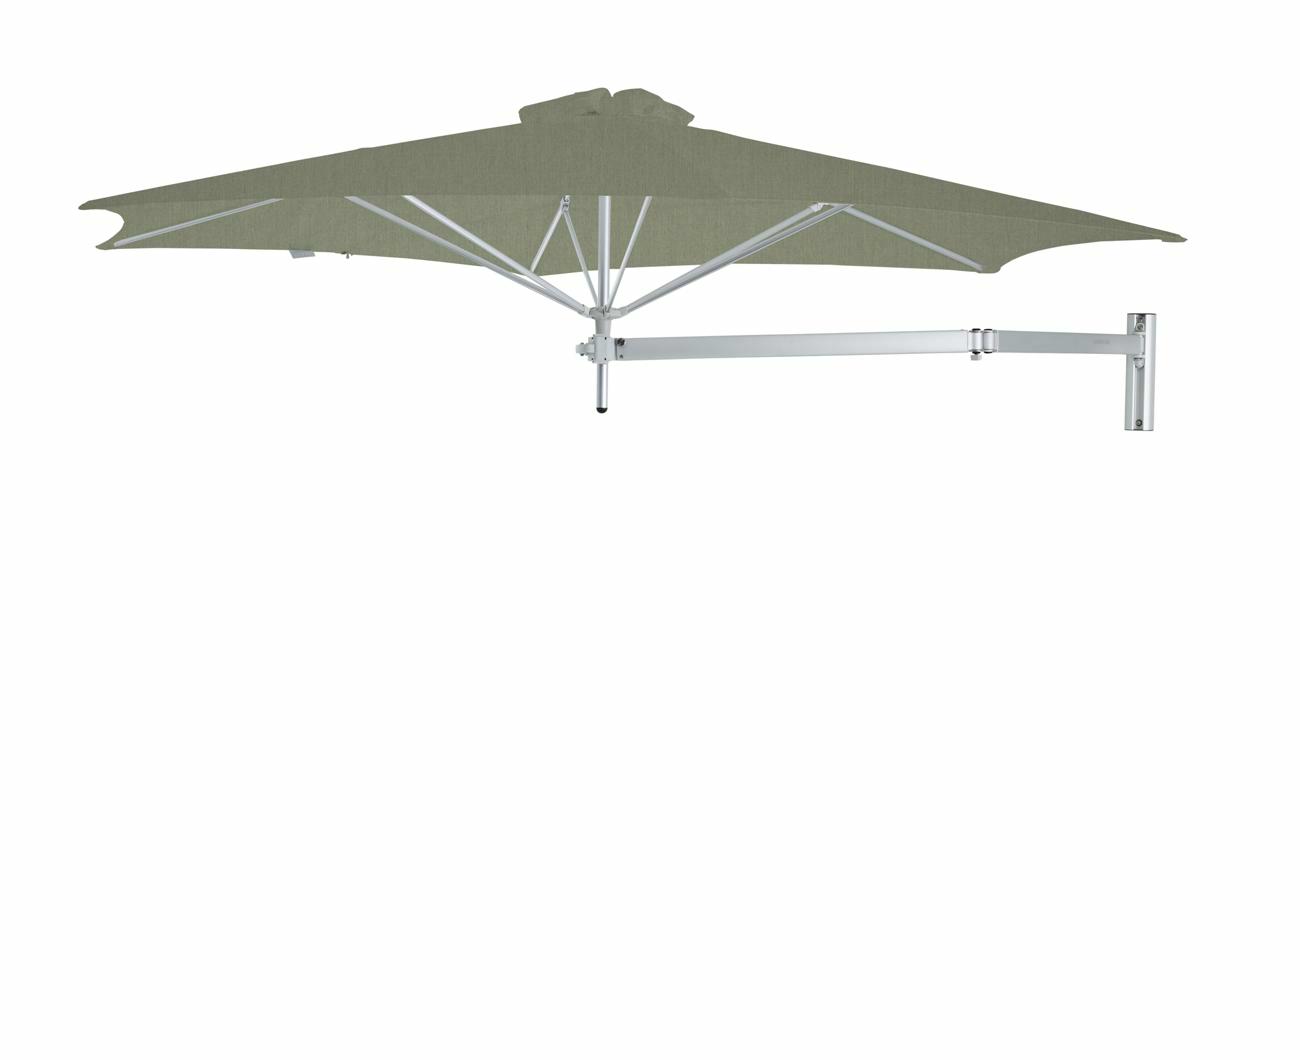 Paraflex canopy